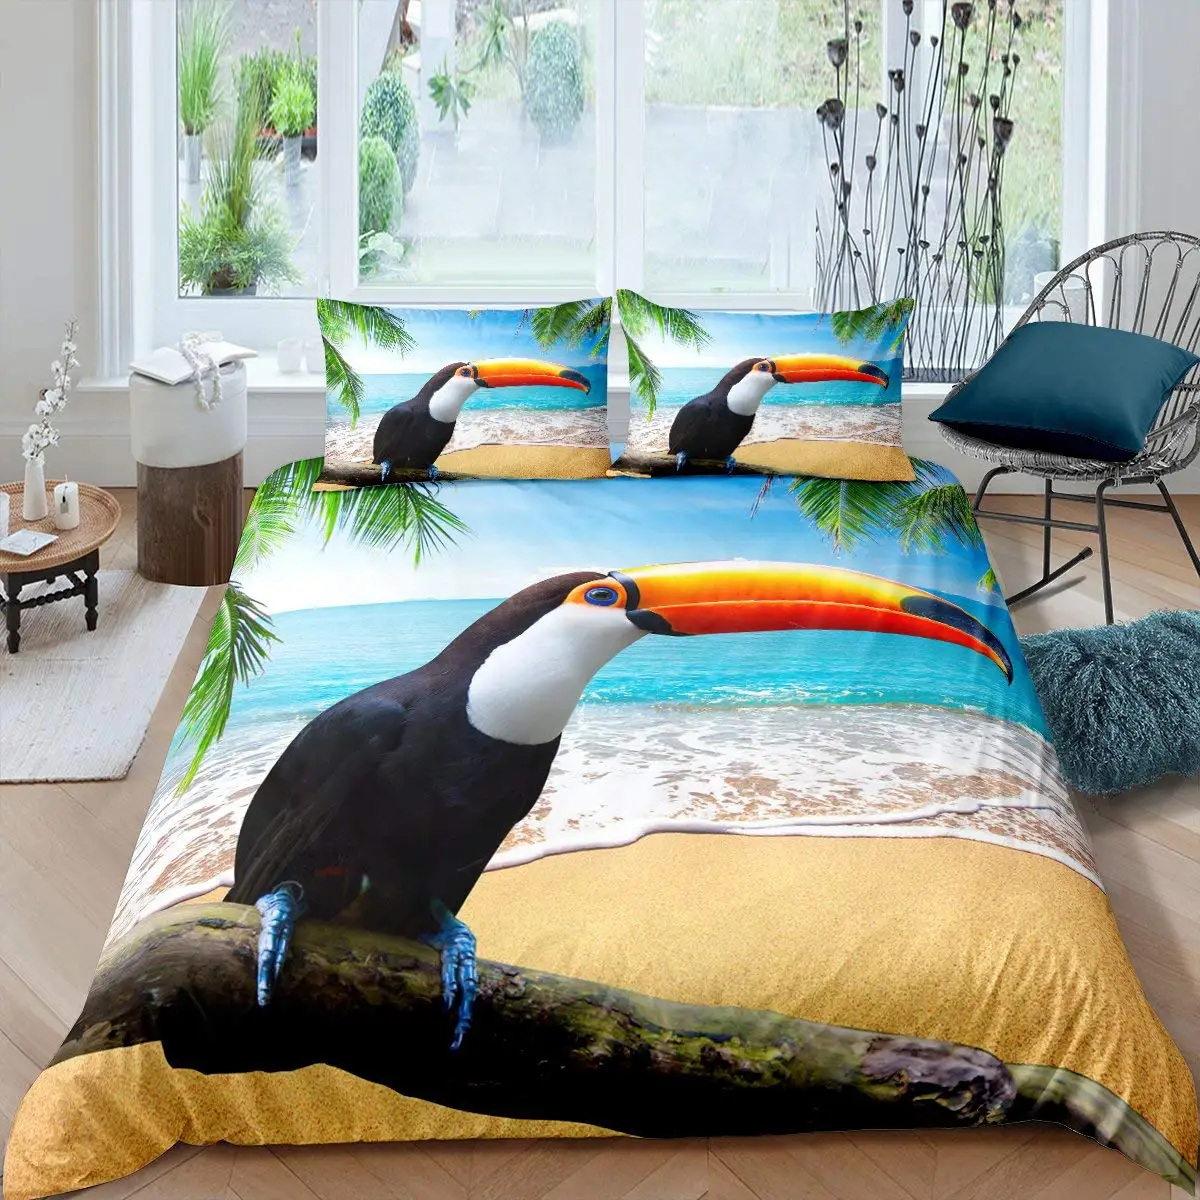 

3D Toucan King Queen Duvet Cover Safari Animals Bedding Set Tropical Jungle Birds Quilt Cover Fresh Nature Green Comforter Cover